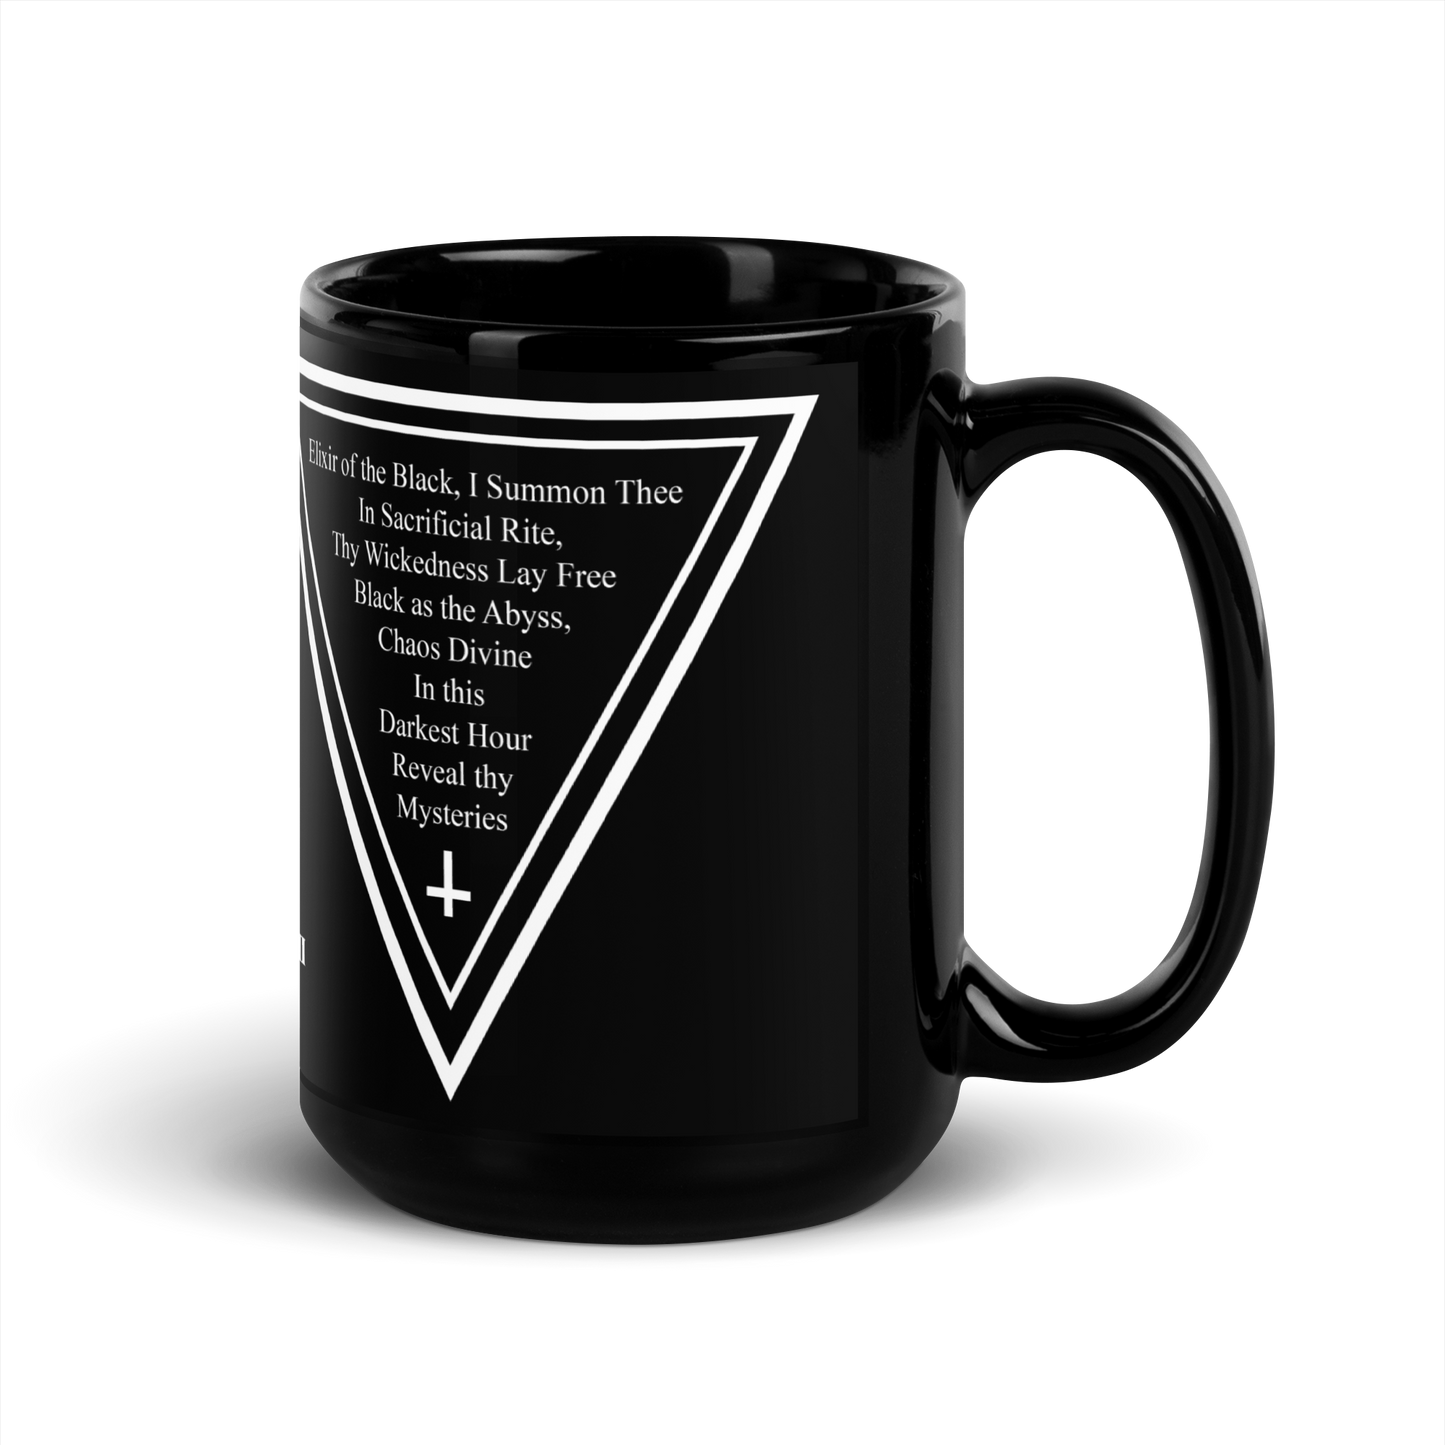 Elixir of the Black • Black Glossy Mug